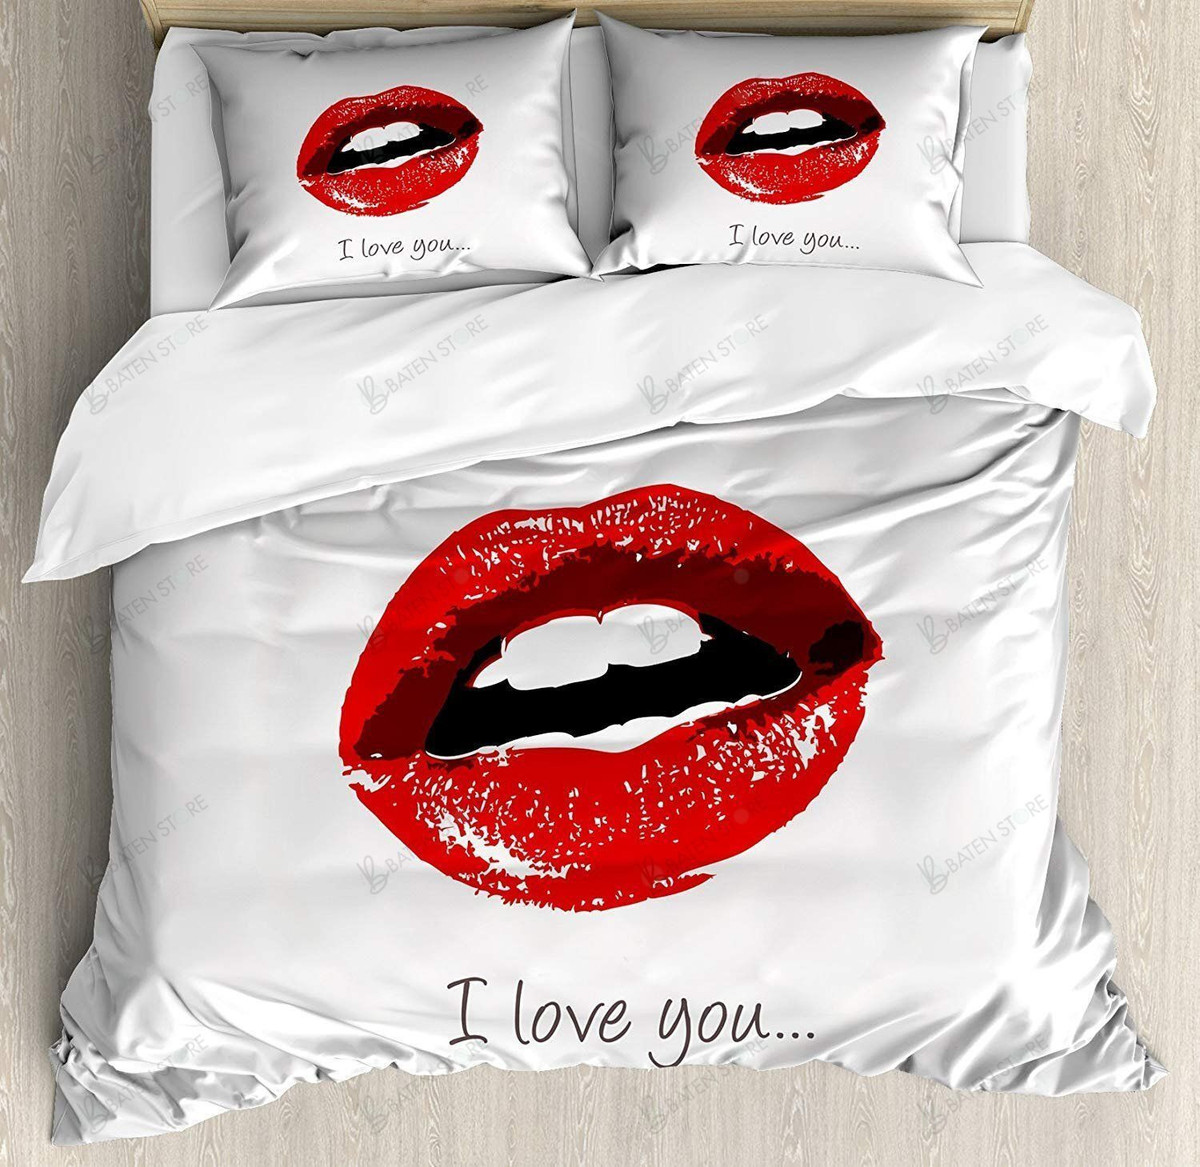 Ajar Desire Red Hot Lipstick Retro Valentineâ€™s Style Love You Bedding Set Bedroom Decor